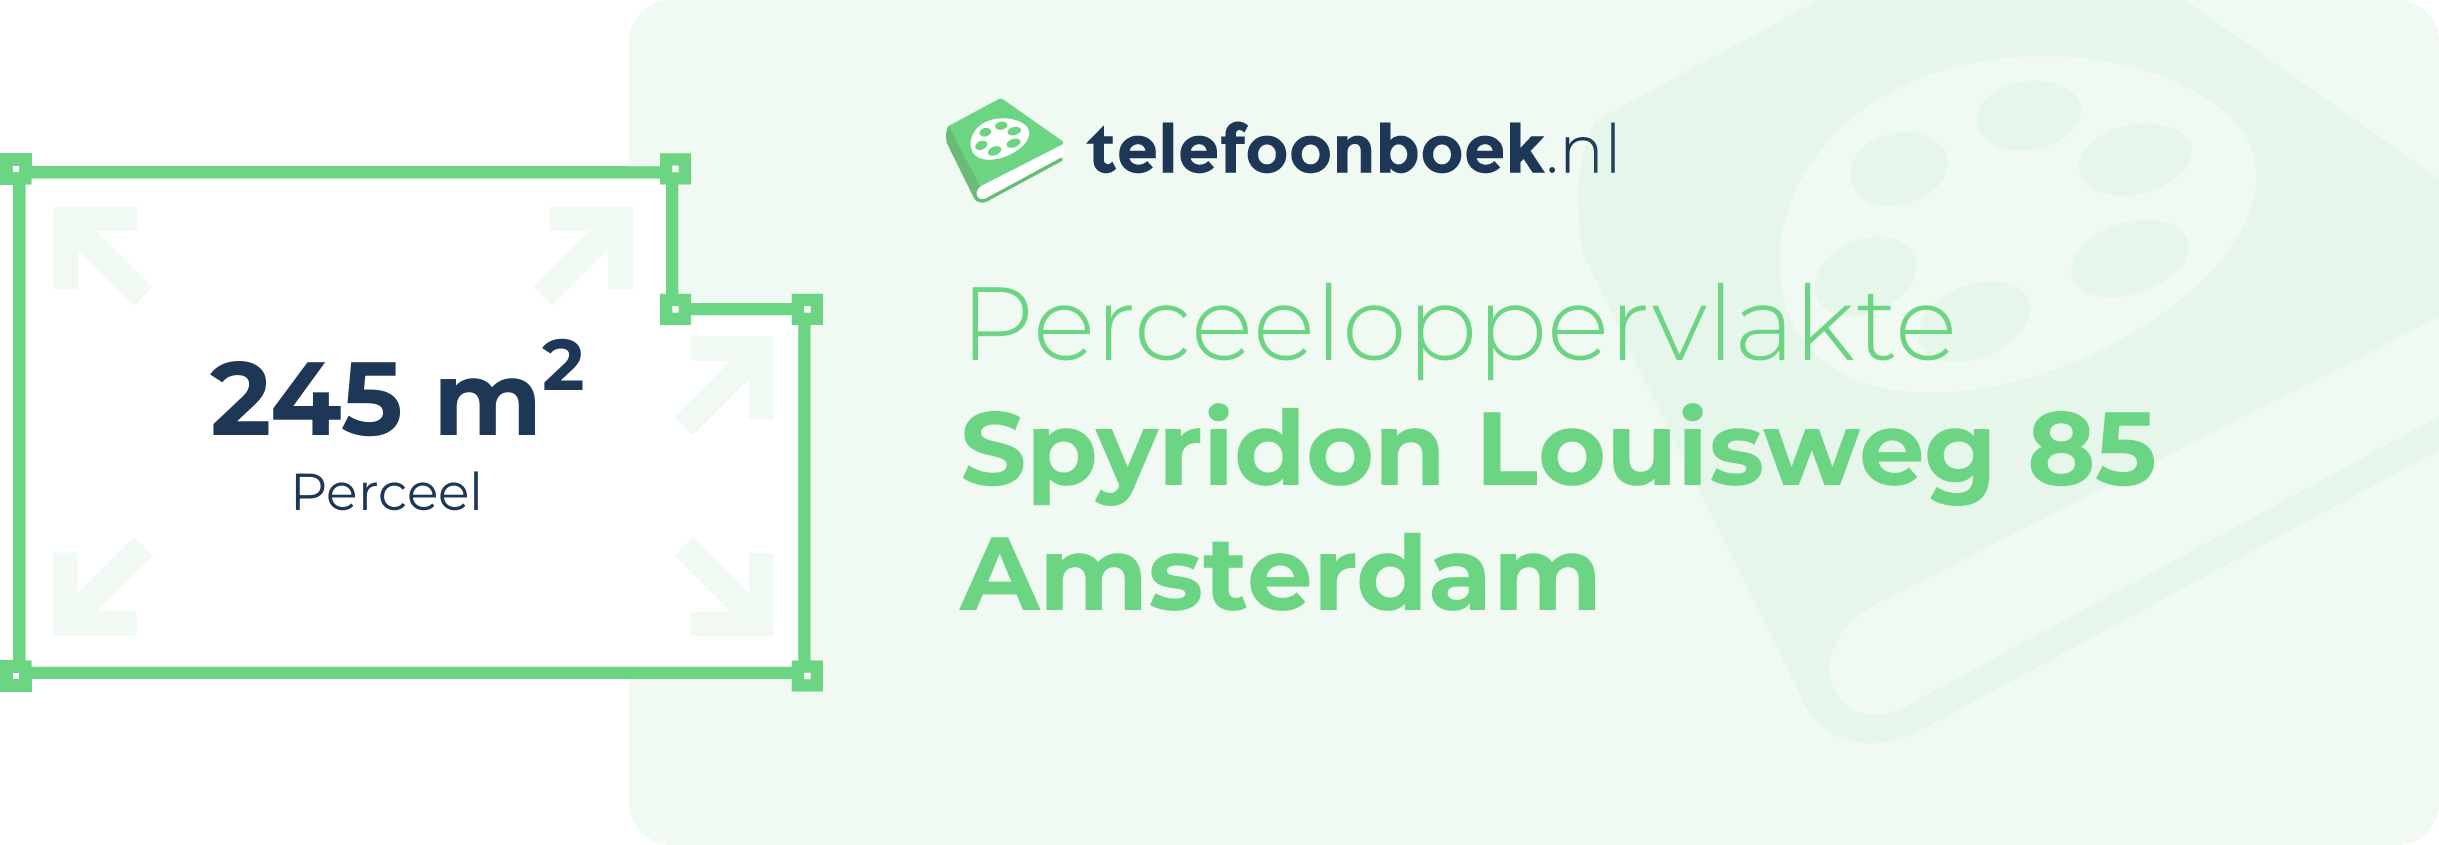 Perceeloppervlakte Spyridon Louisweg 85 Amsterdam